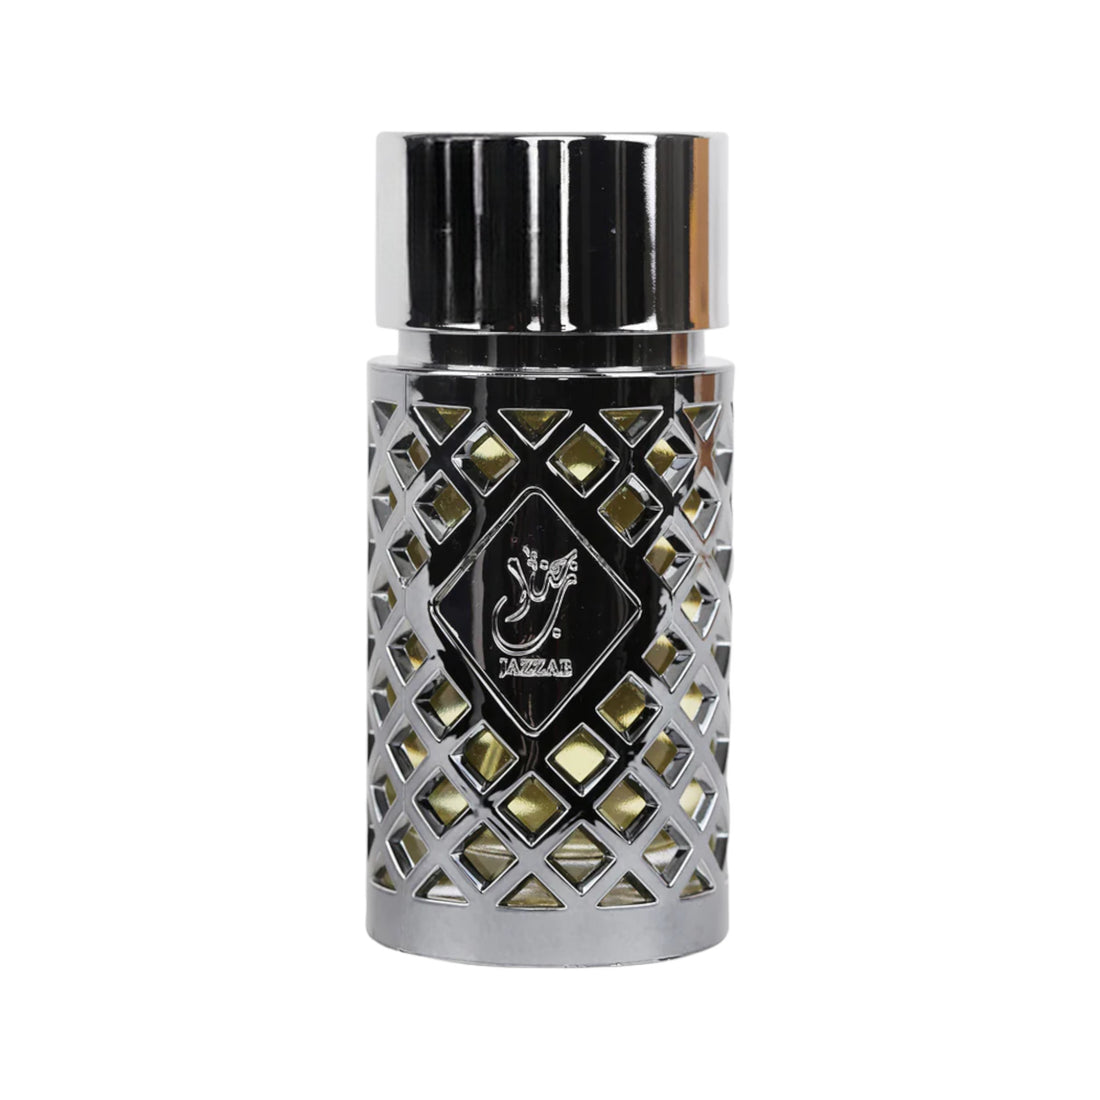 Jazzab Silver Eau De Parfum 100ml Bottle by Ard Al Zaafaran